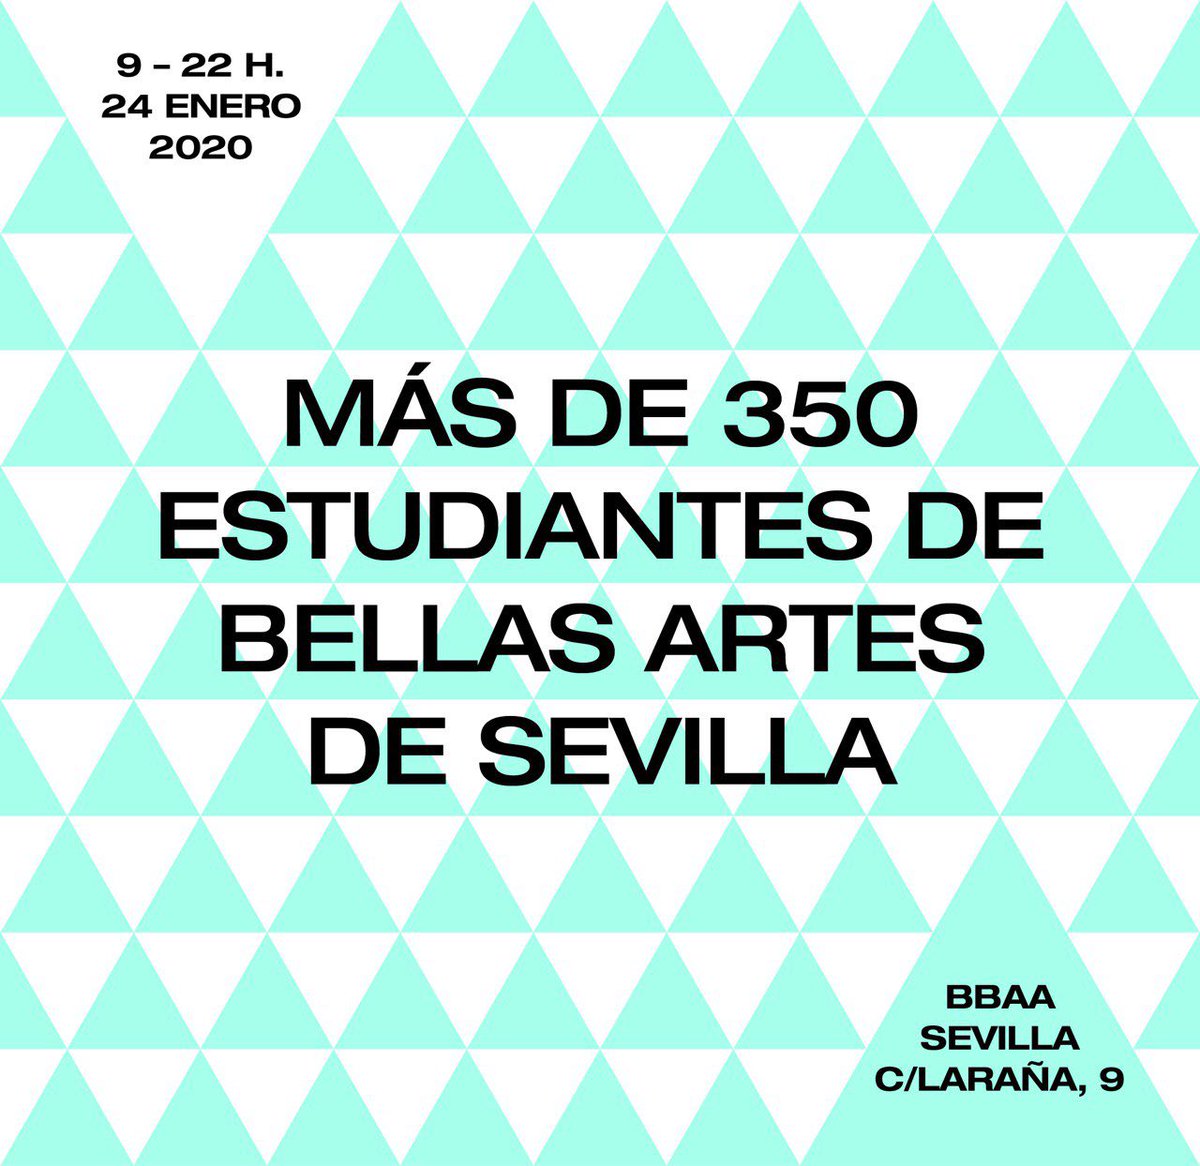 Facultad de Bellas Artes US (@BBAA_us) on Twitter photo 2020-01-24 09:32:48